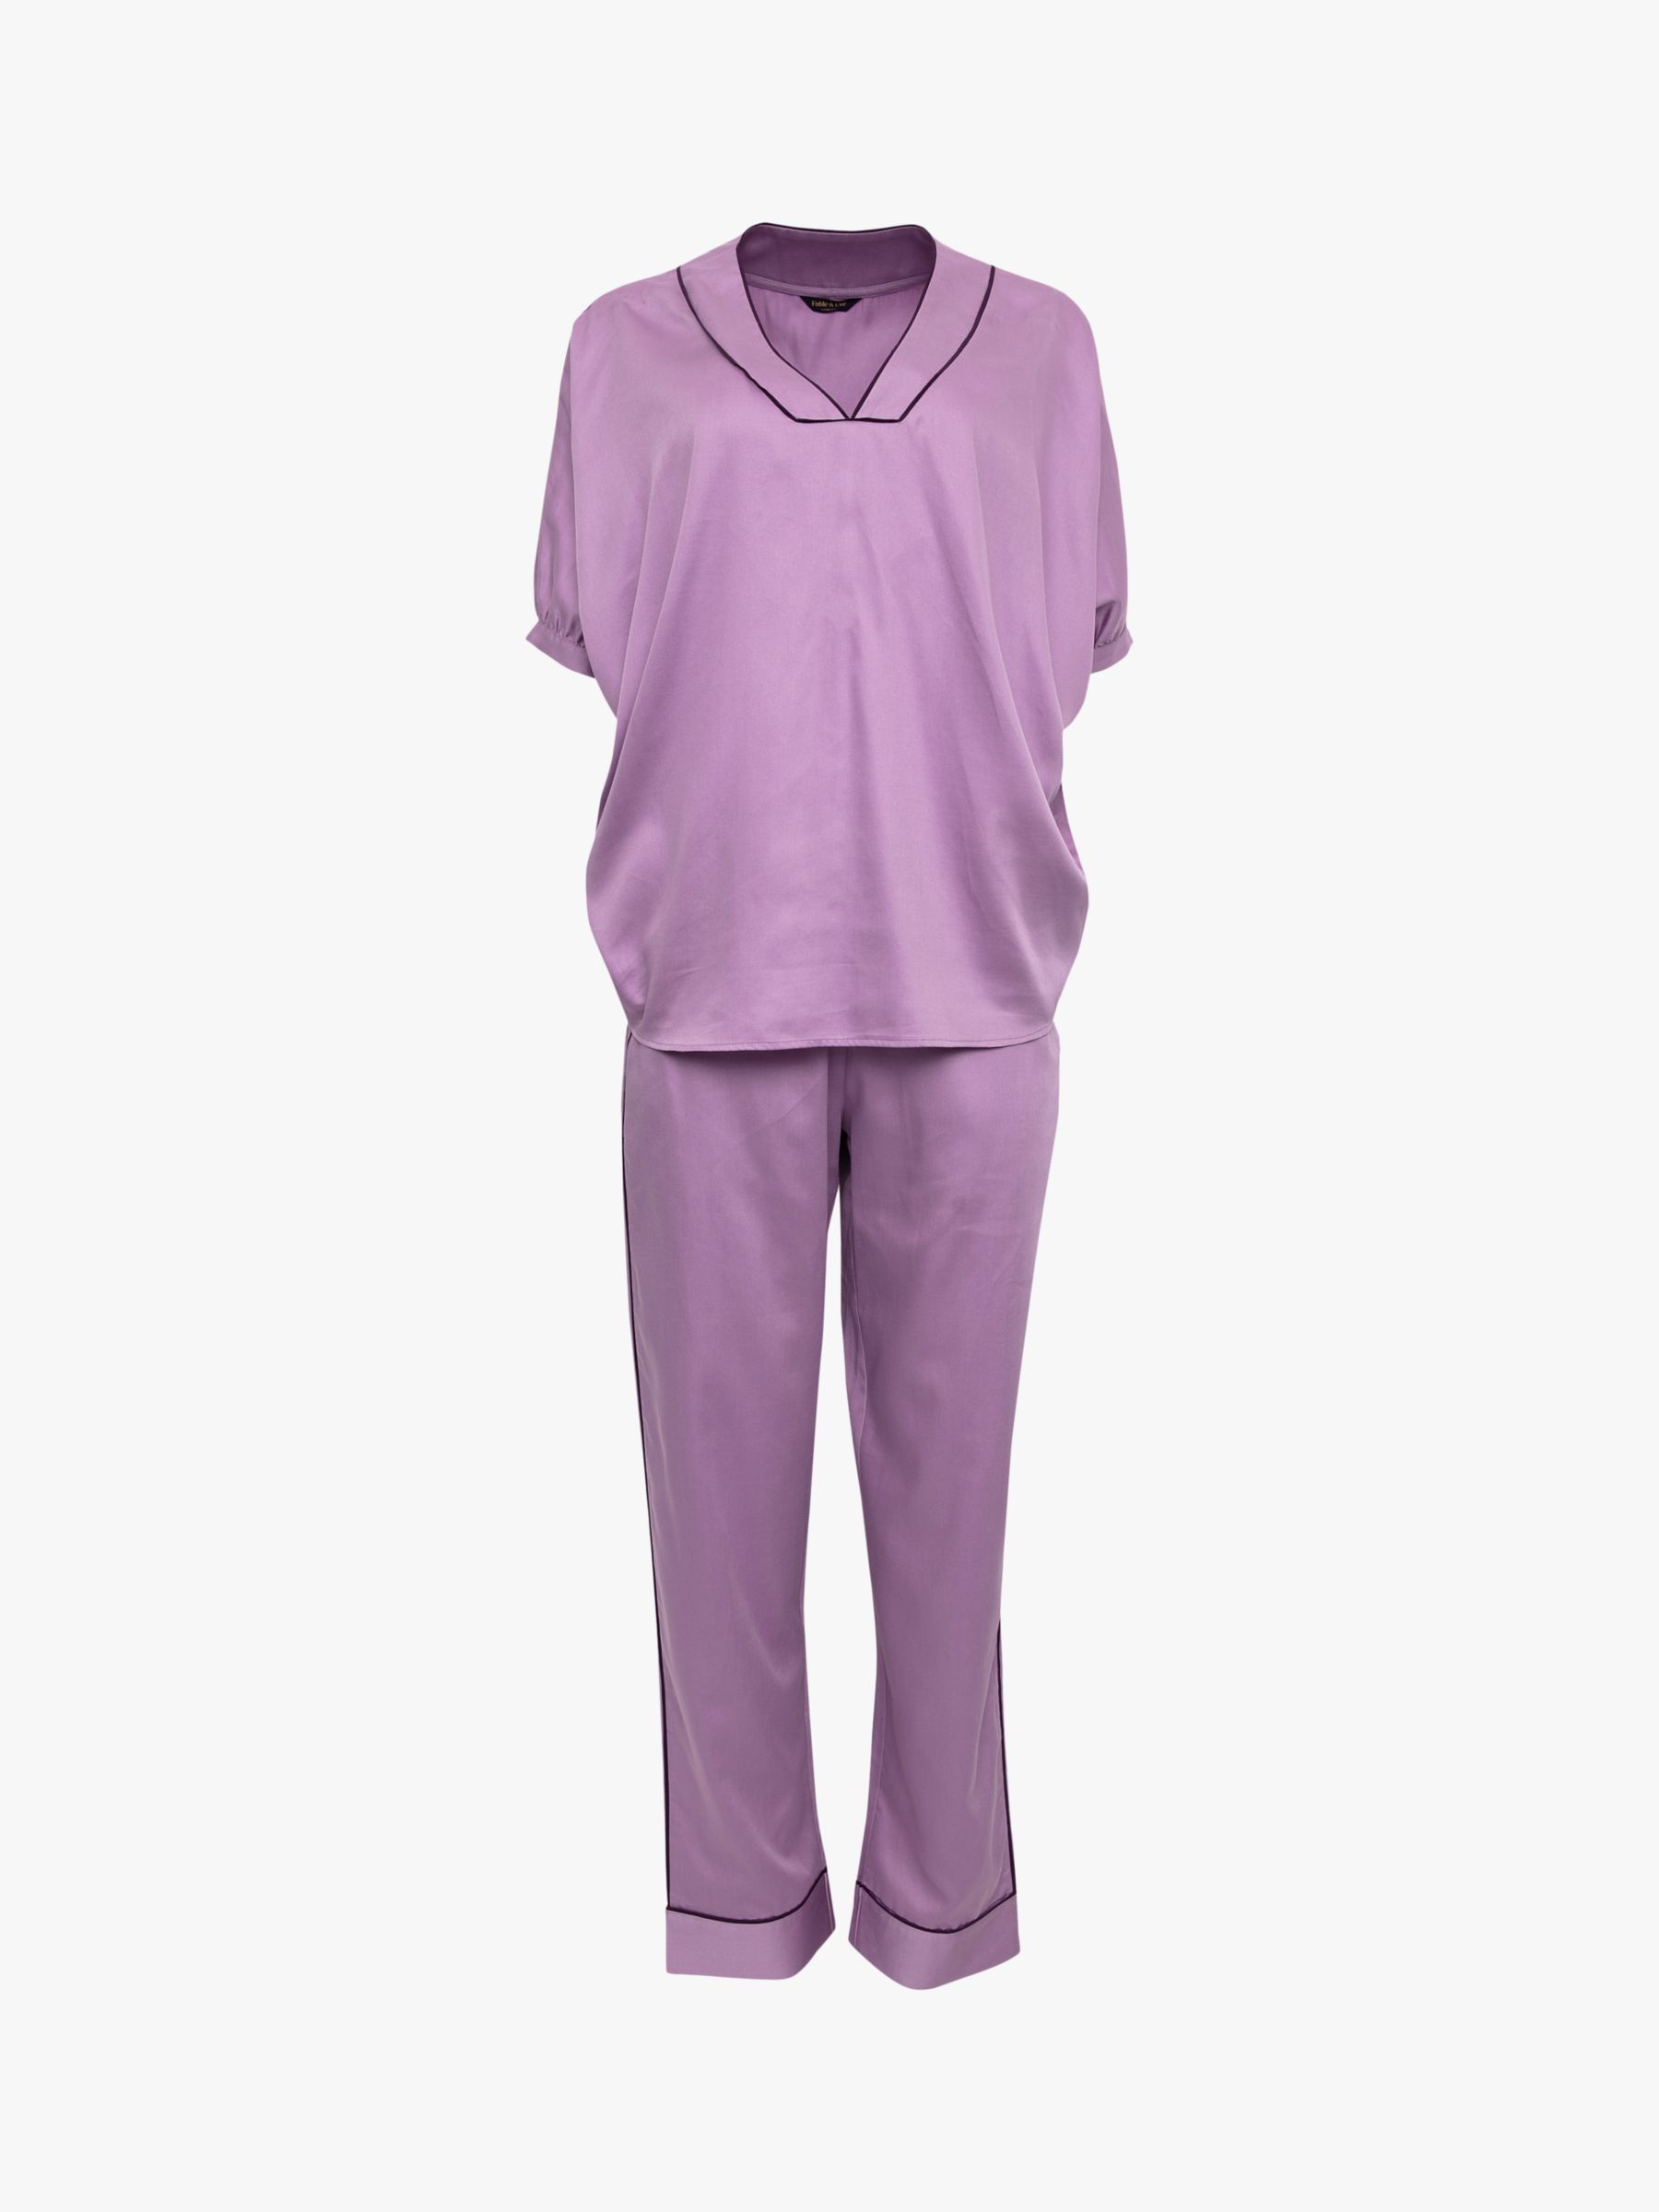 Fable & Eve Silky Pyjama Set, Lilac at John Lewis & Partners